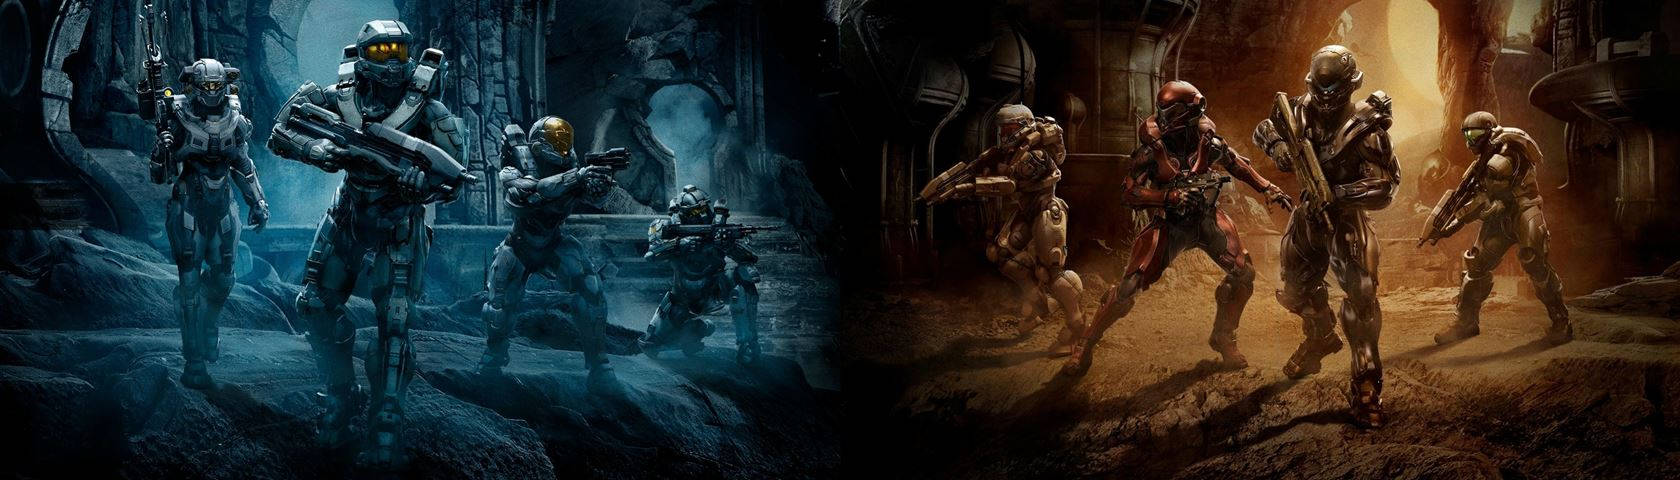 Halo 5 Guardians Dual Screen Wallpaper